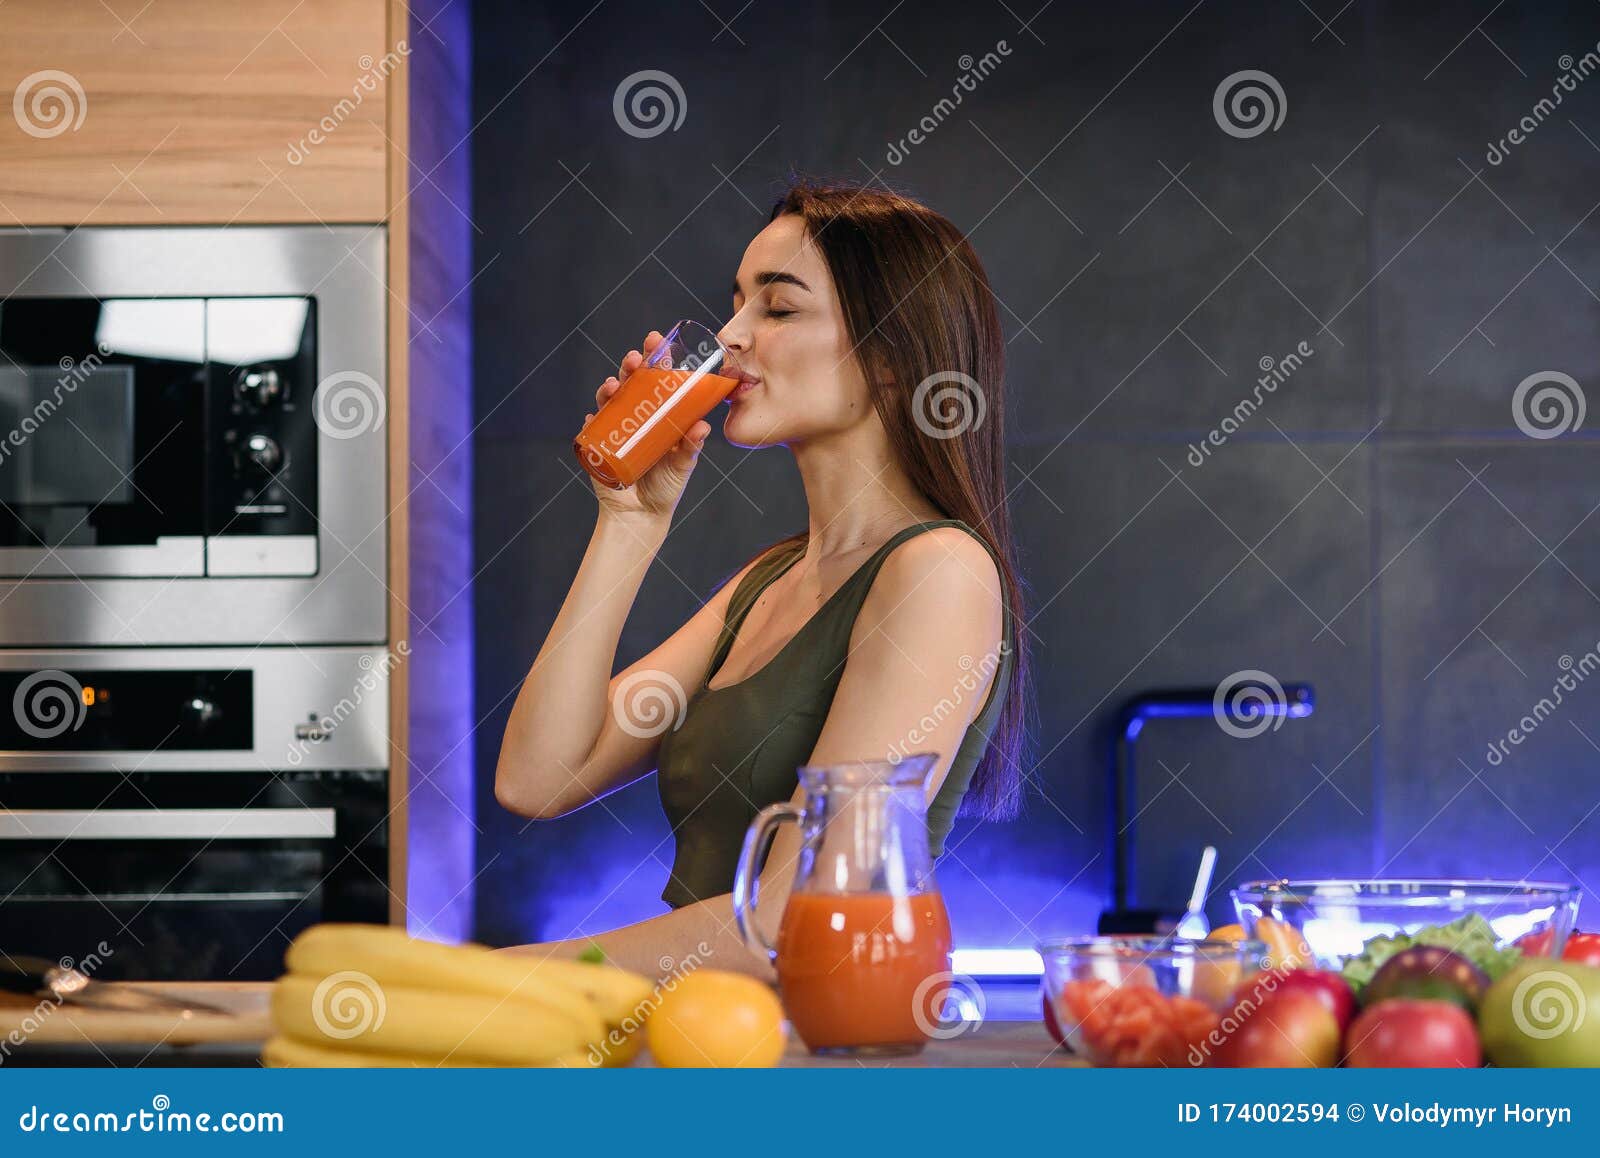 https://thumbs.dreamstime.com/z/beautiful-young-woman-drinks-orange-fruit-fresh-juice-kitchen-morning-beautiful-young-woman-glass-orange-174002594.jpg